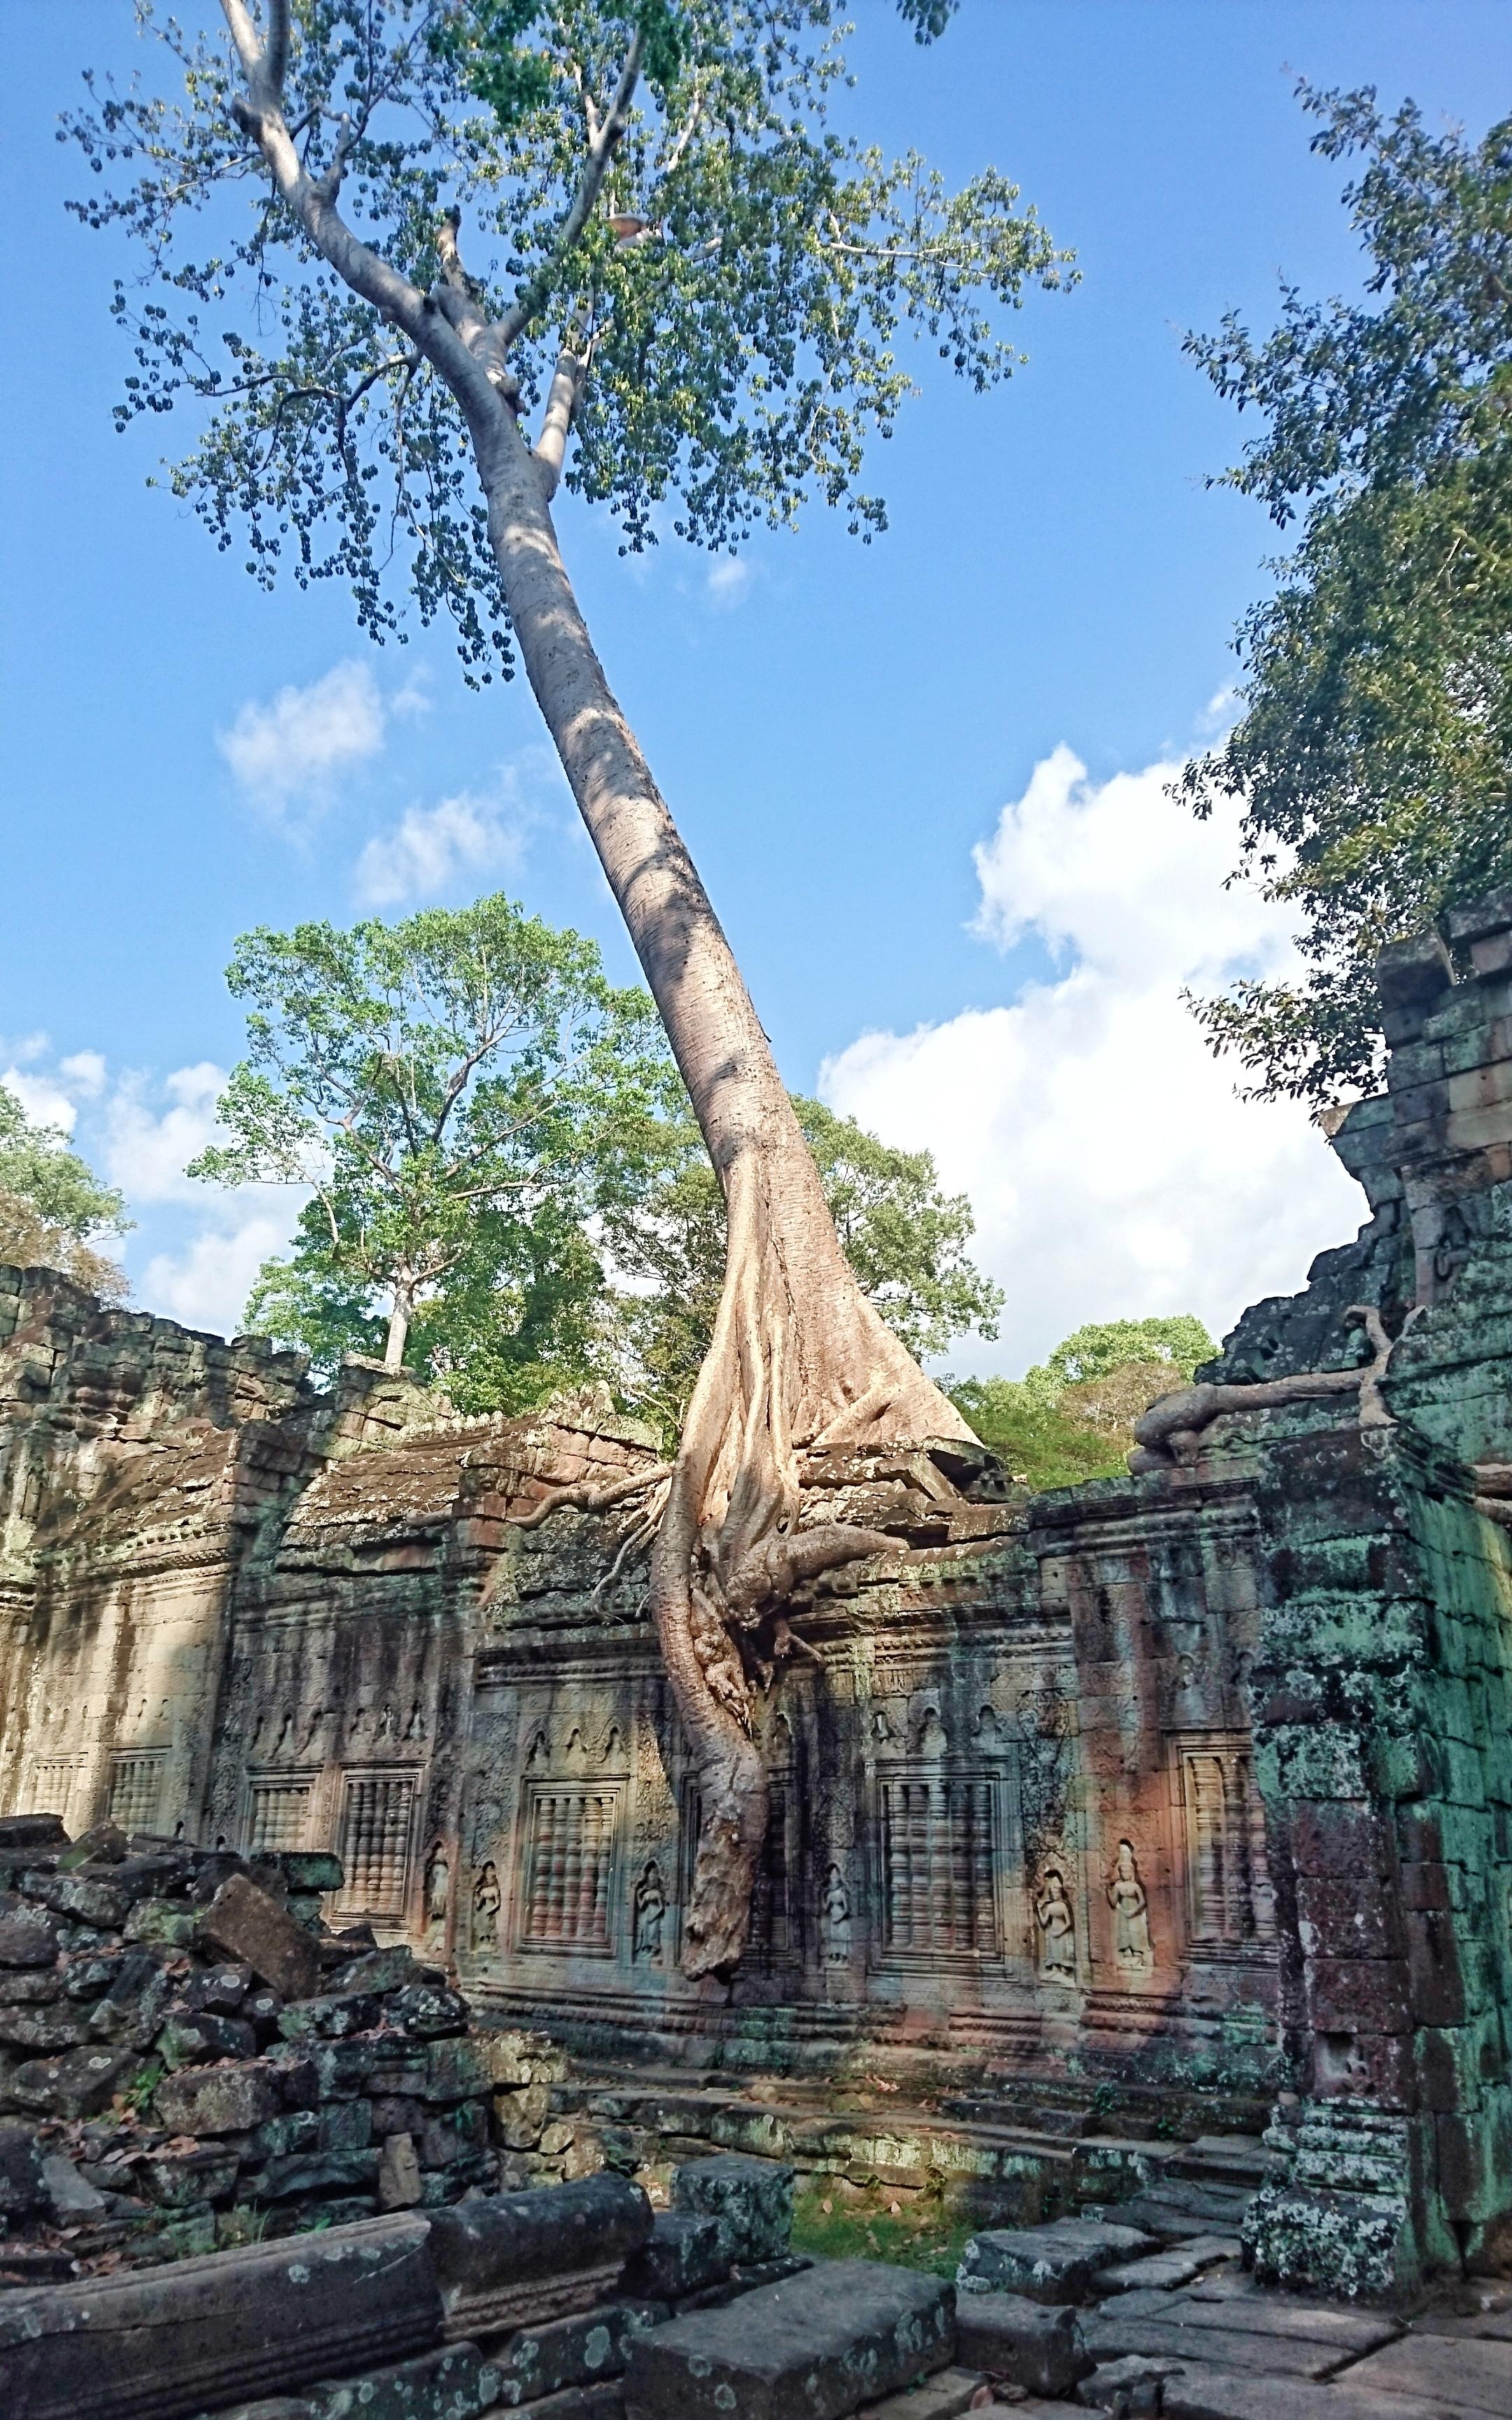 Kultur trifft Natur in #kambodscha #travel